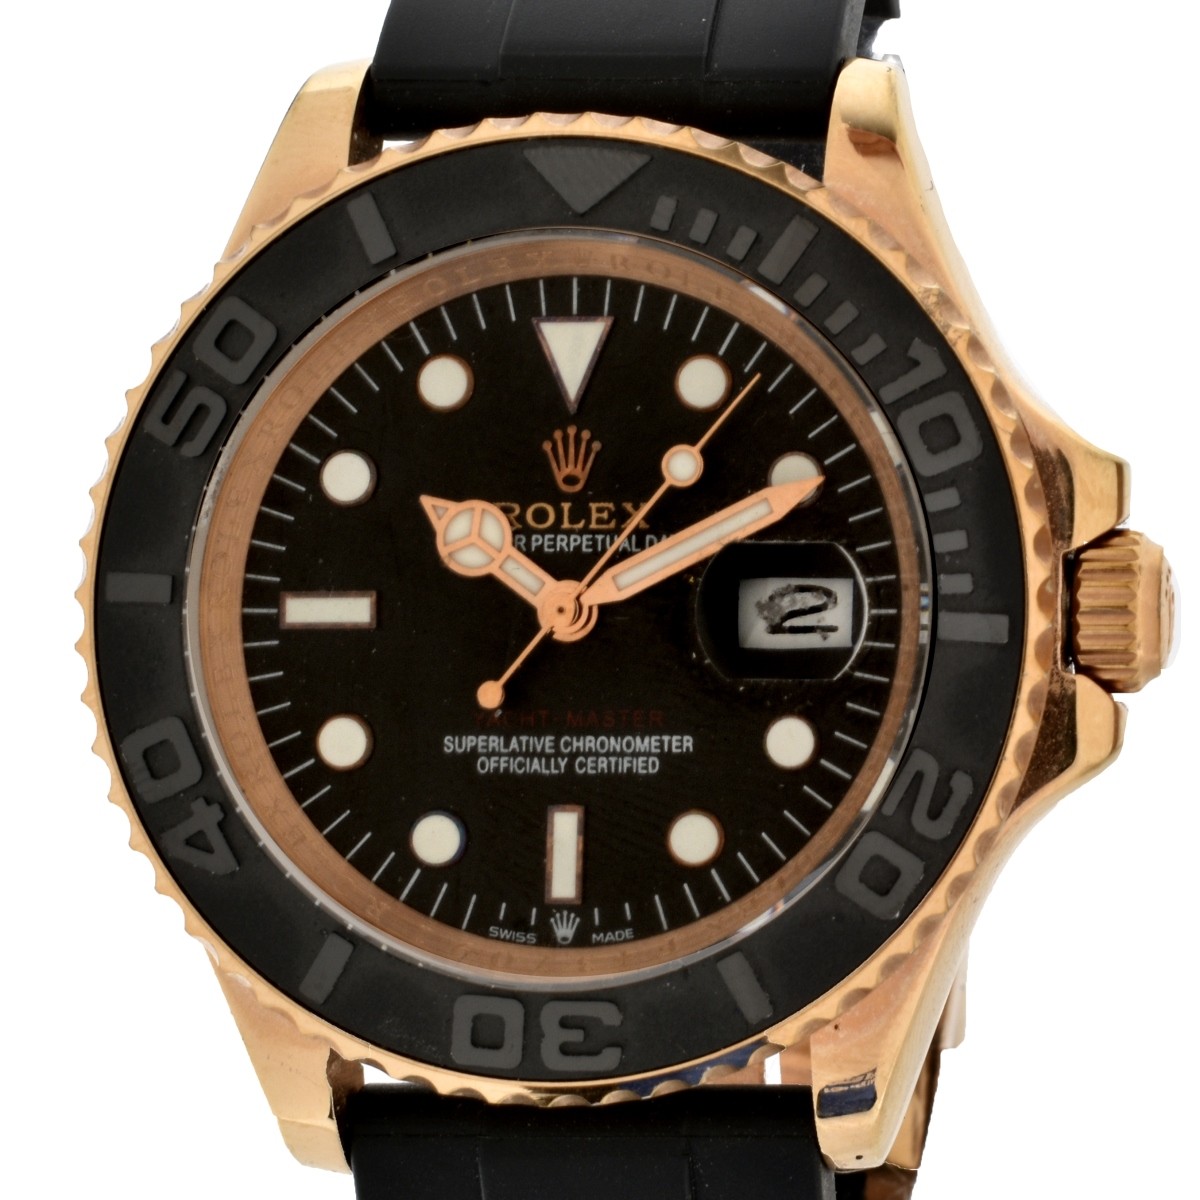 Replica "Rolex Yachtmaster" Watch